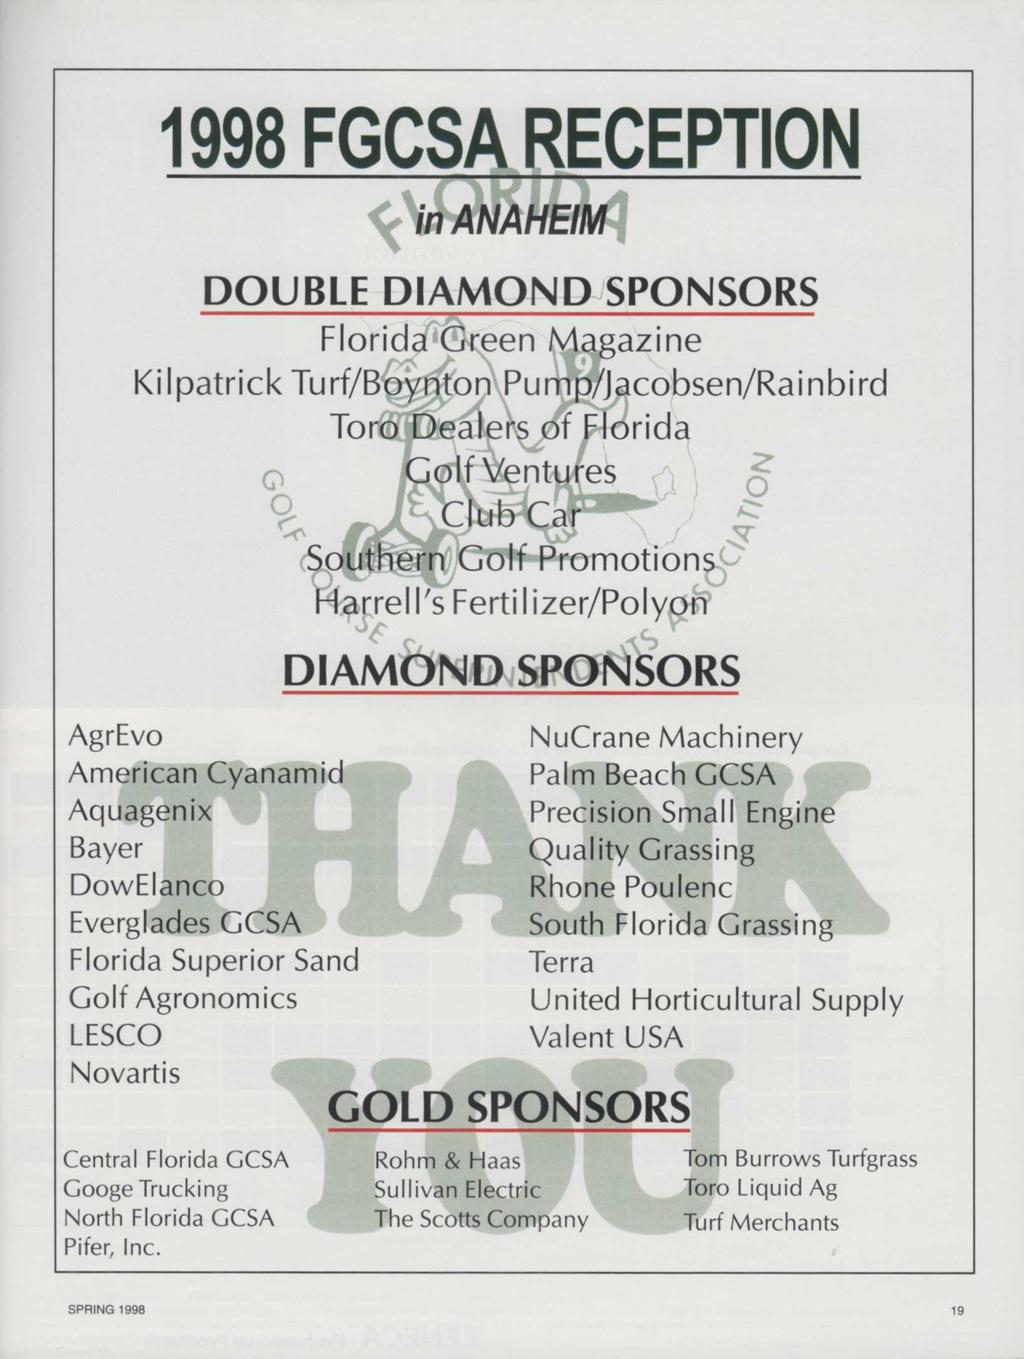 1998 FGCSA RECEPTION in ANAHEIM DOUBLE DIAMOND SPONSORS Florida Green Magazine Kilpatrick Turf/Boynton\Pump/Jacobsen/Rainbird Torffl^eatefe of Florida AgrEvo American Cyanamid Aquagenix Bayer